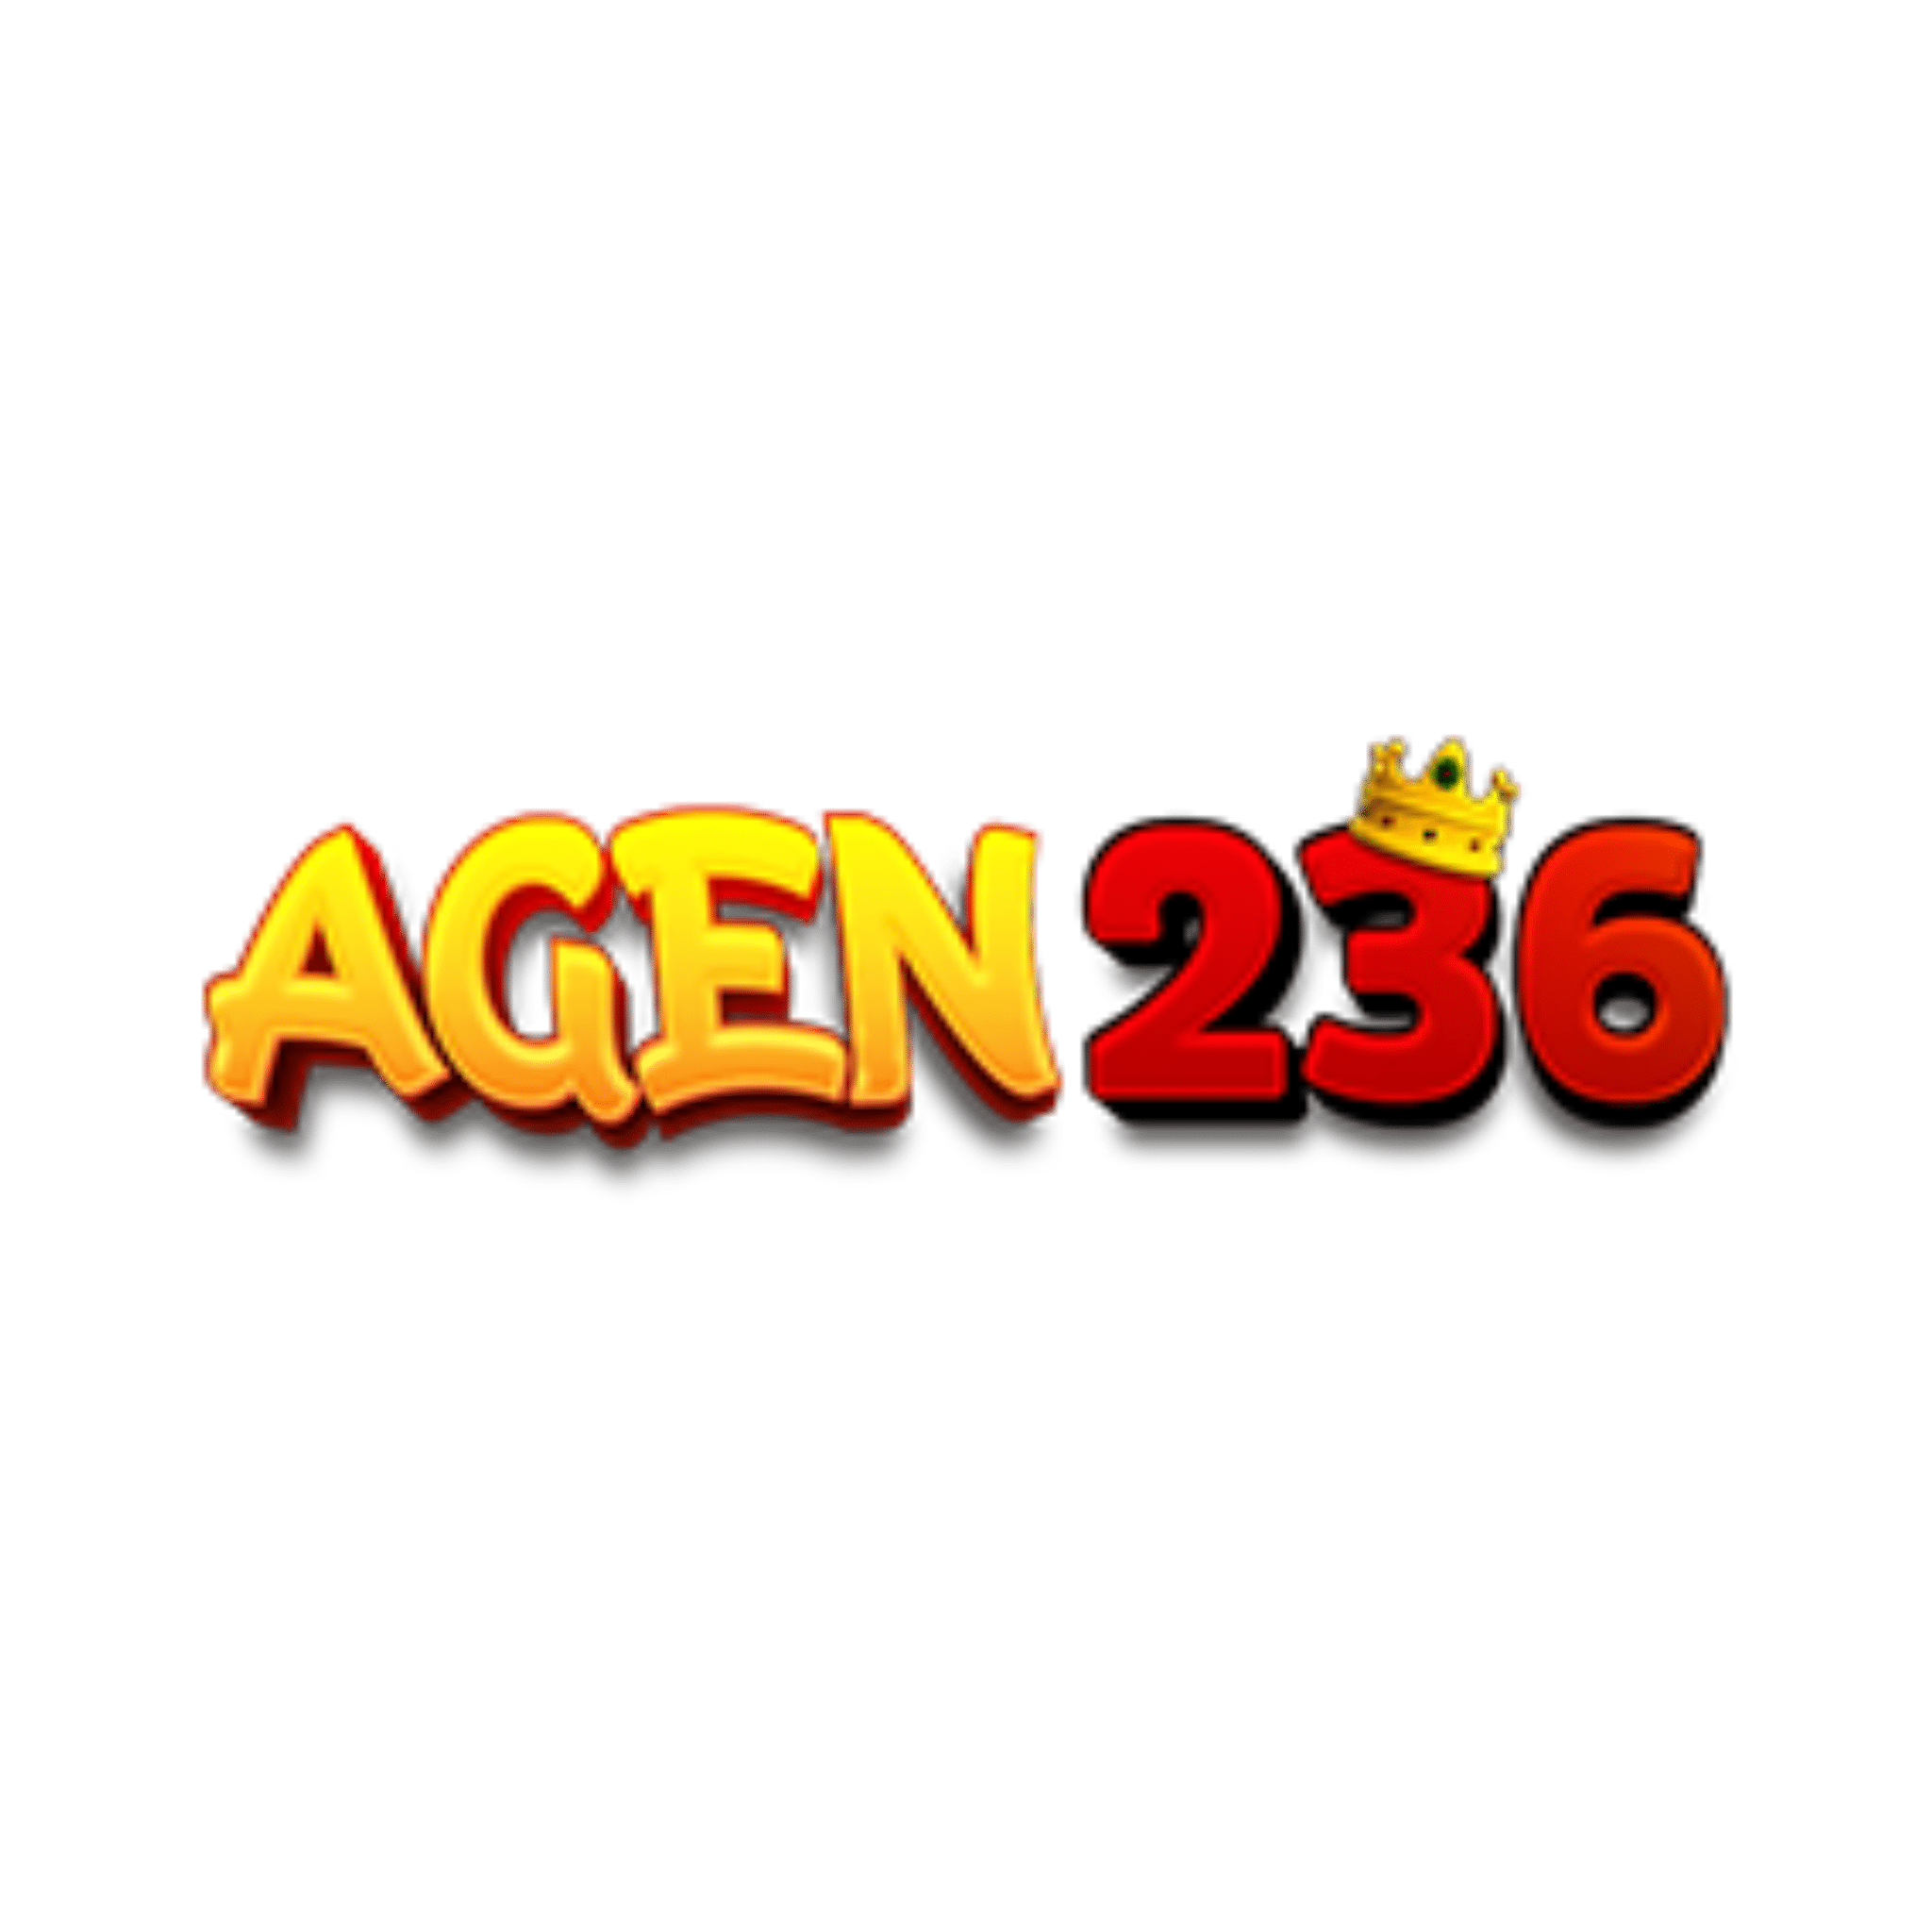 agen236